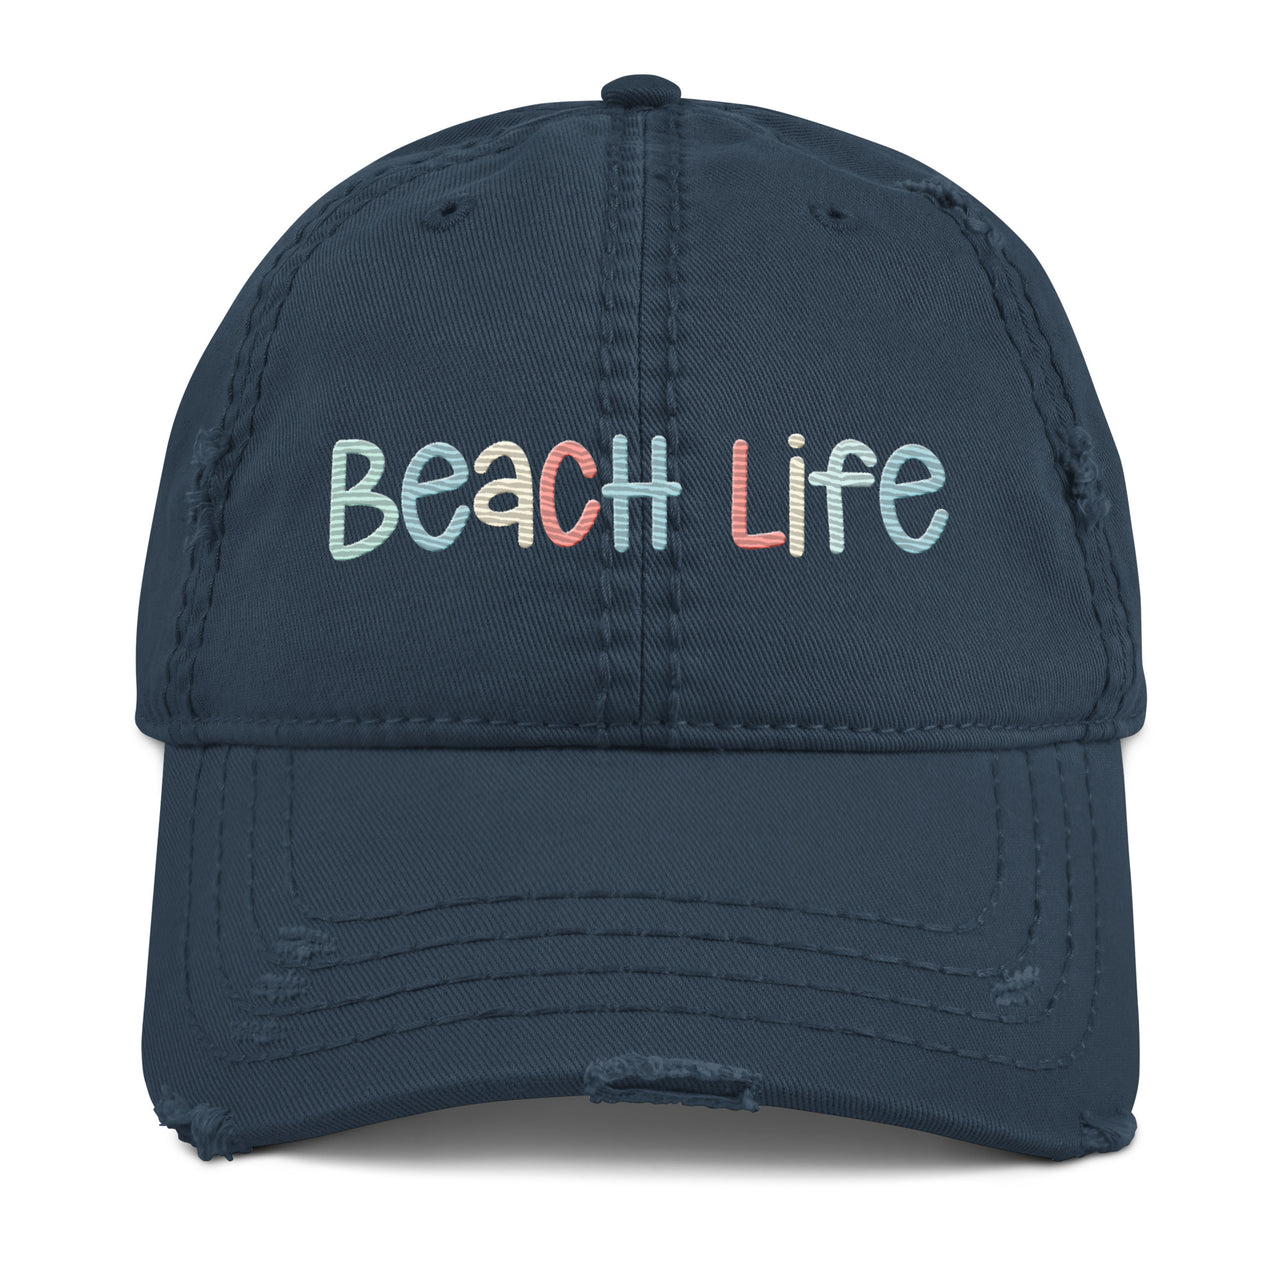 Beach Life Distressed Hat, Baseball Cap  New England Trading Co Navy  